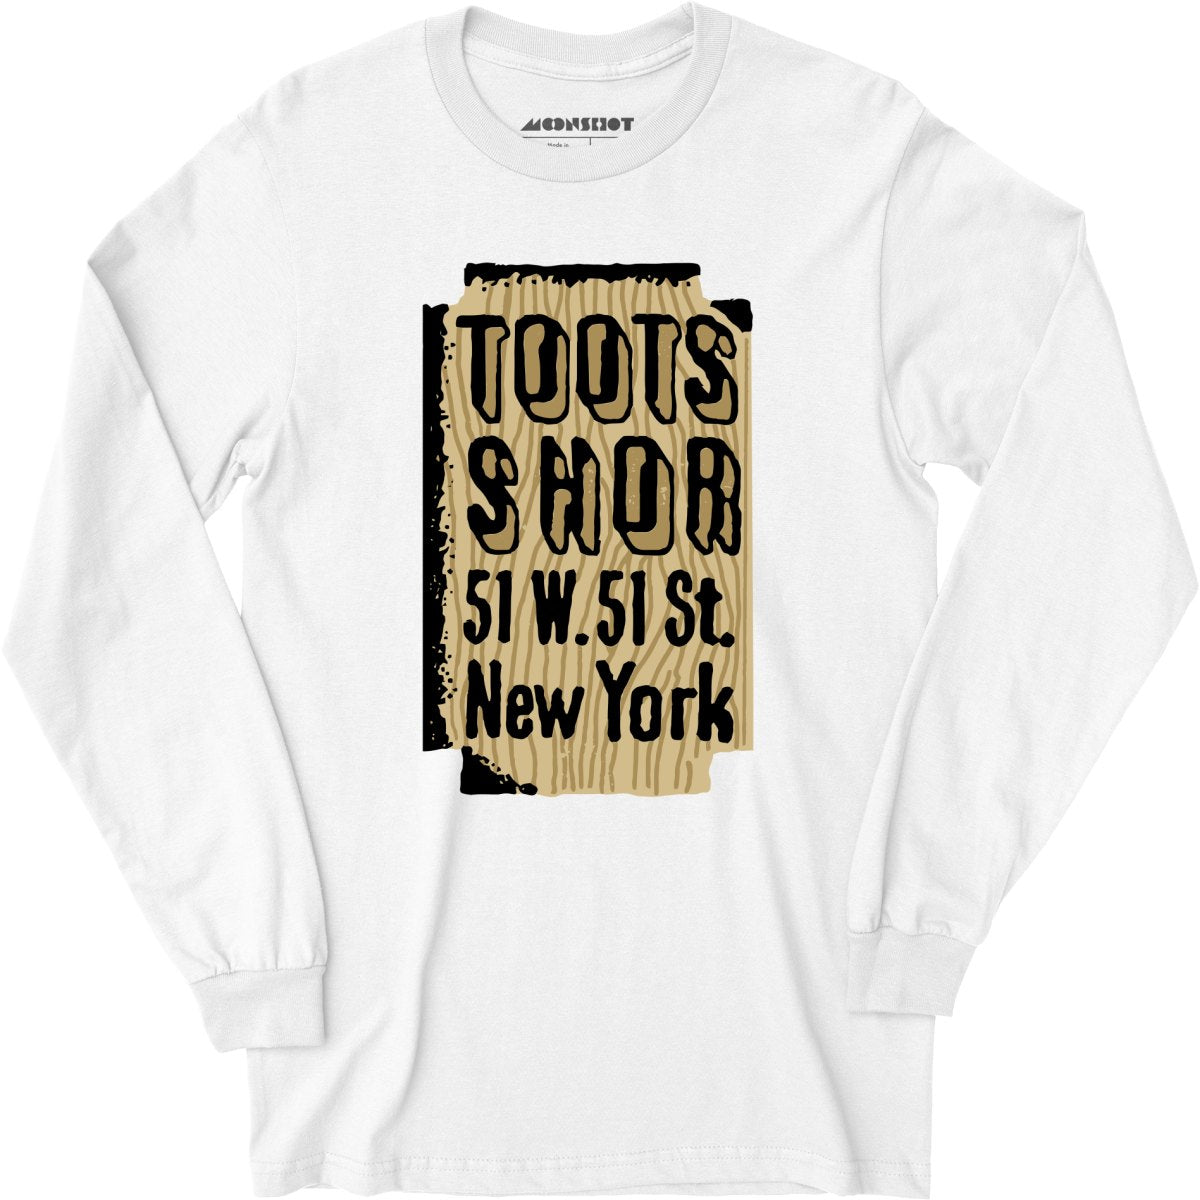 Toots Shor Sign - Manhattan, NY - Vintage Restaurant - Long Sleeve T-Shirt